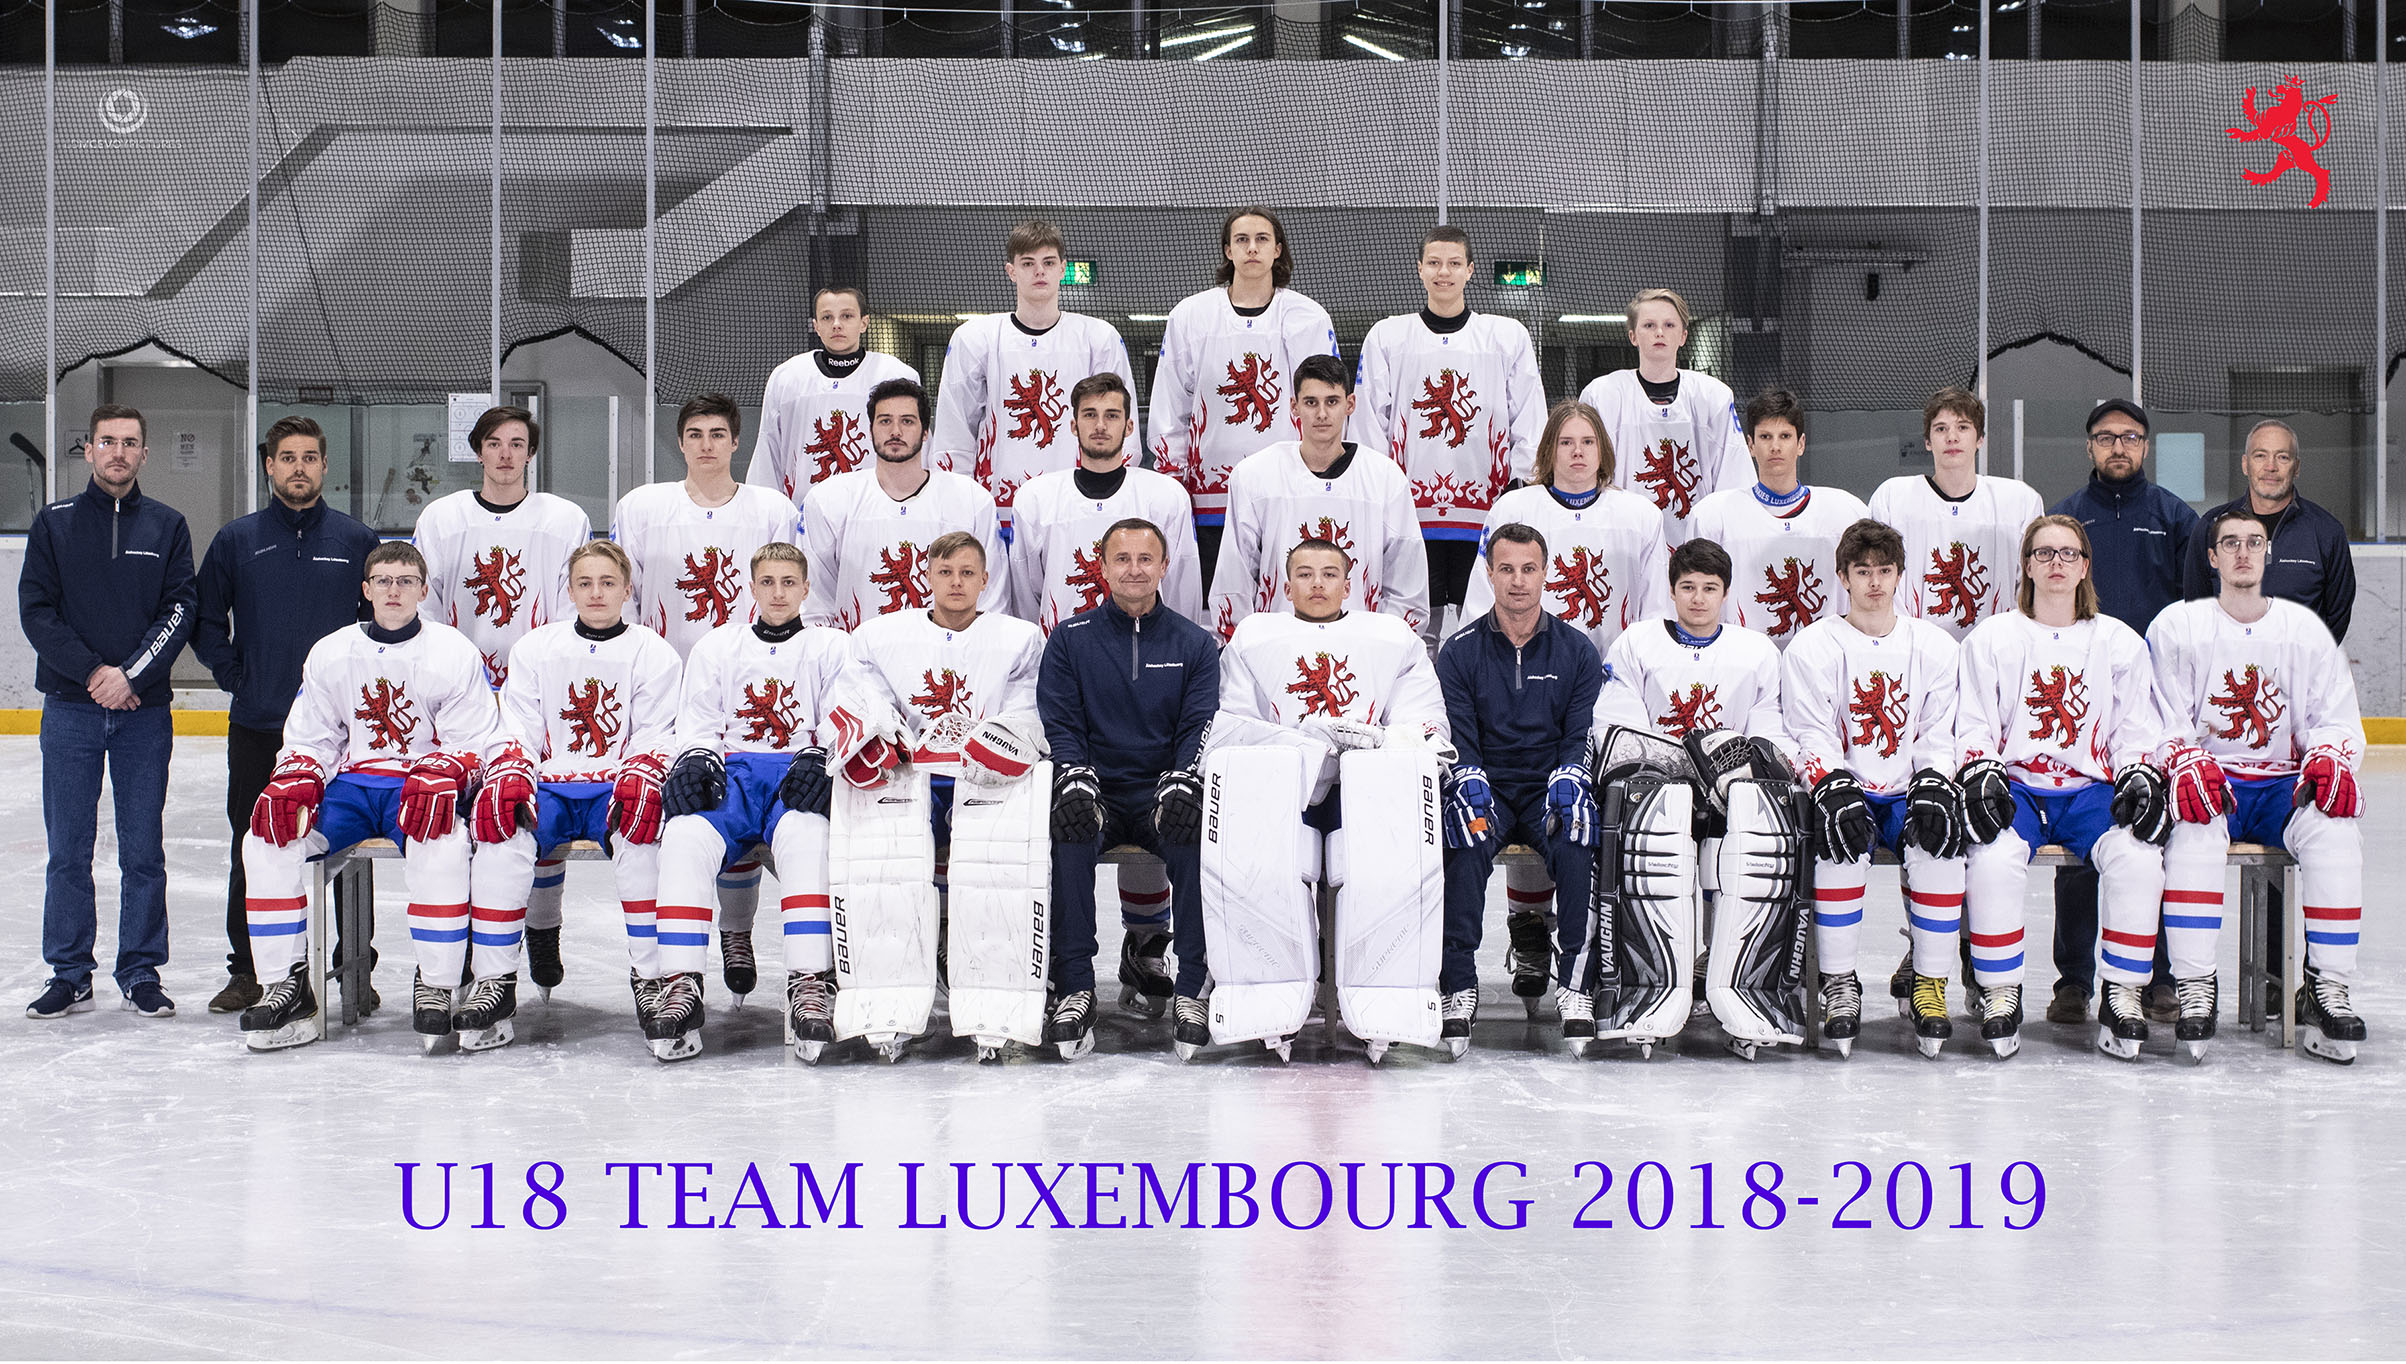 Luxembourg’s U18 national team of ice hockey goes to South Africa / Déi letzebuergesch U18 Nationalequipe flitt an Südafrika. / L'équipe nationale luxembourgeoise de hockey sur glace U18 se rend en Afrique du Sud